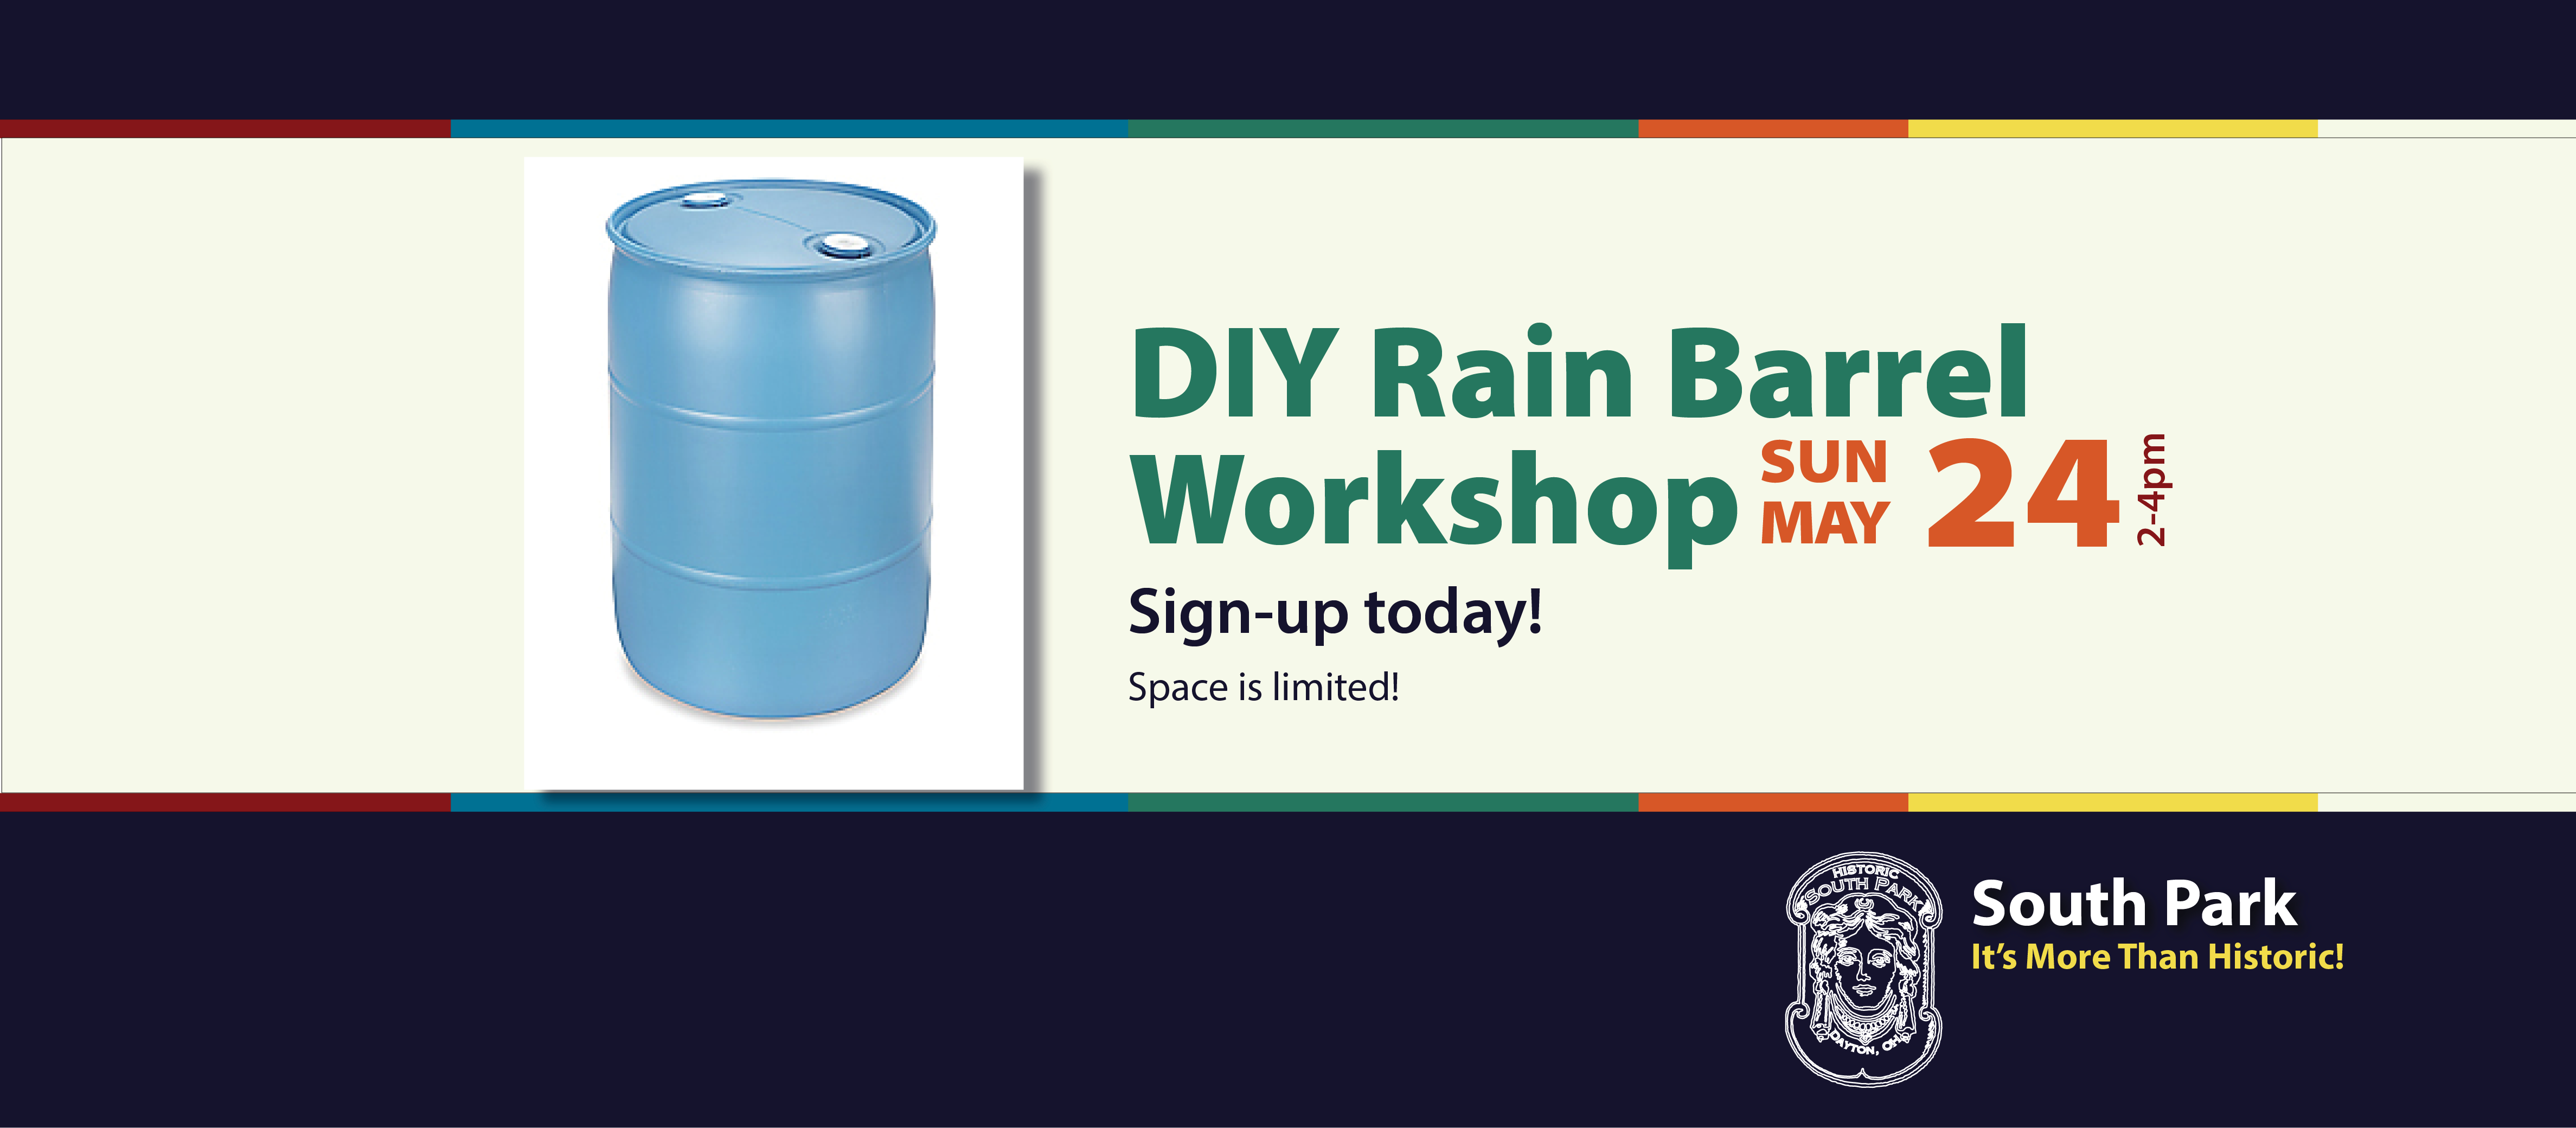 2015 Historic South Park Rain Barrel Workshop